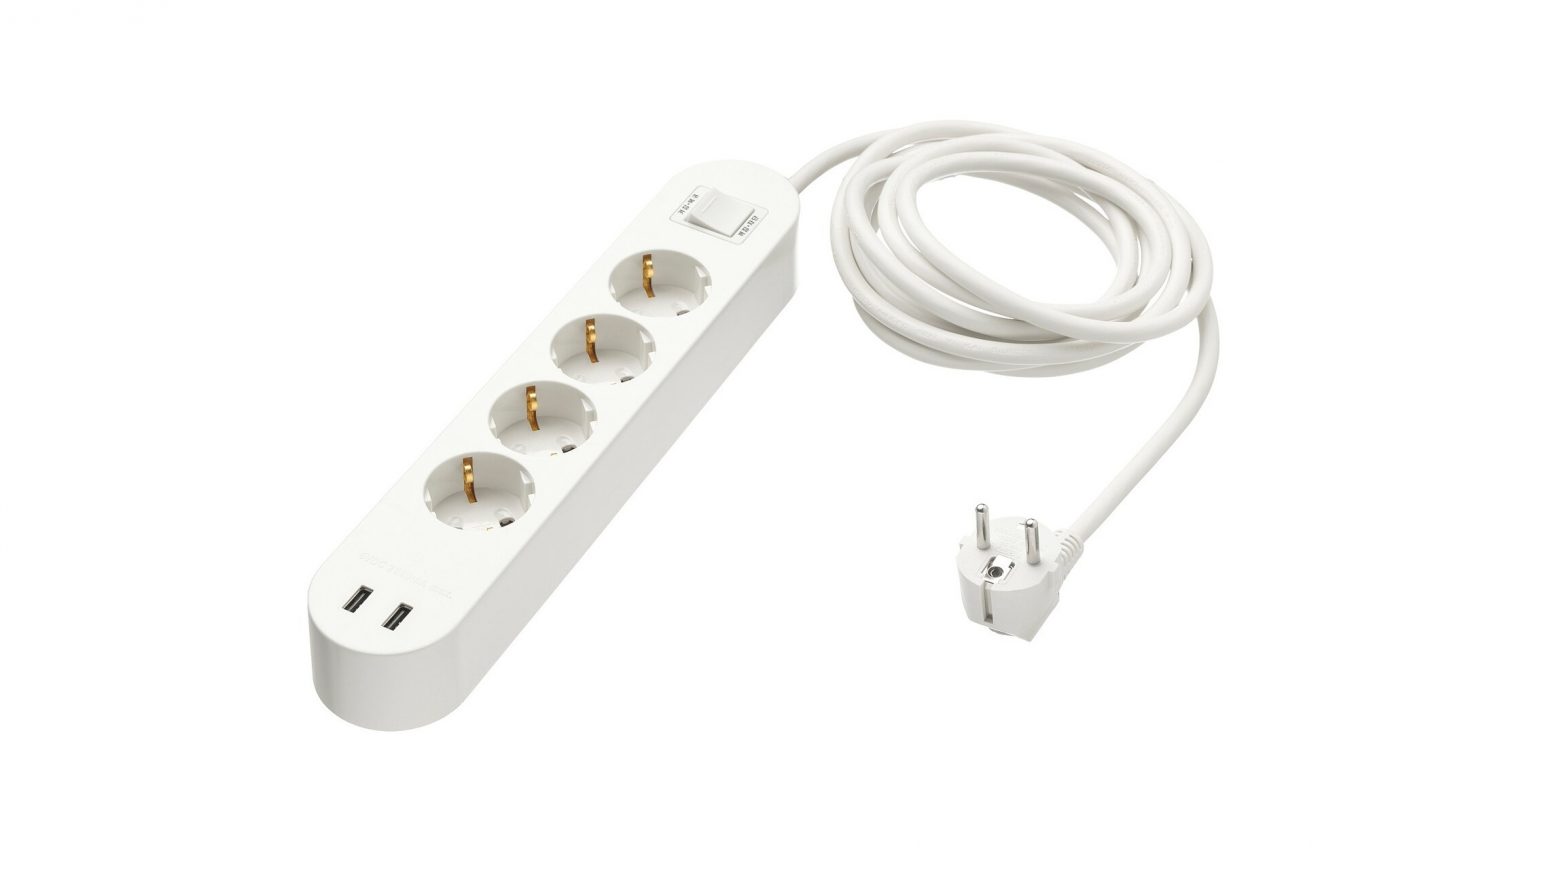 IKEA KOPPLA 4-Way Socket with USB Ports Installation Guide